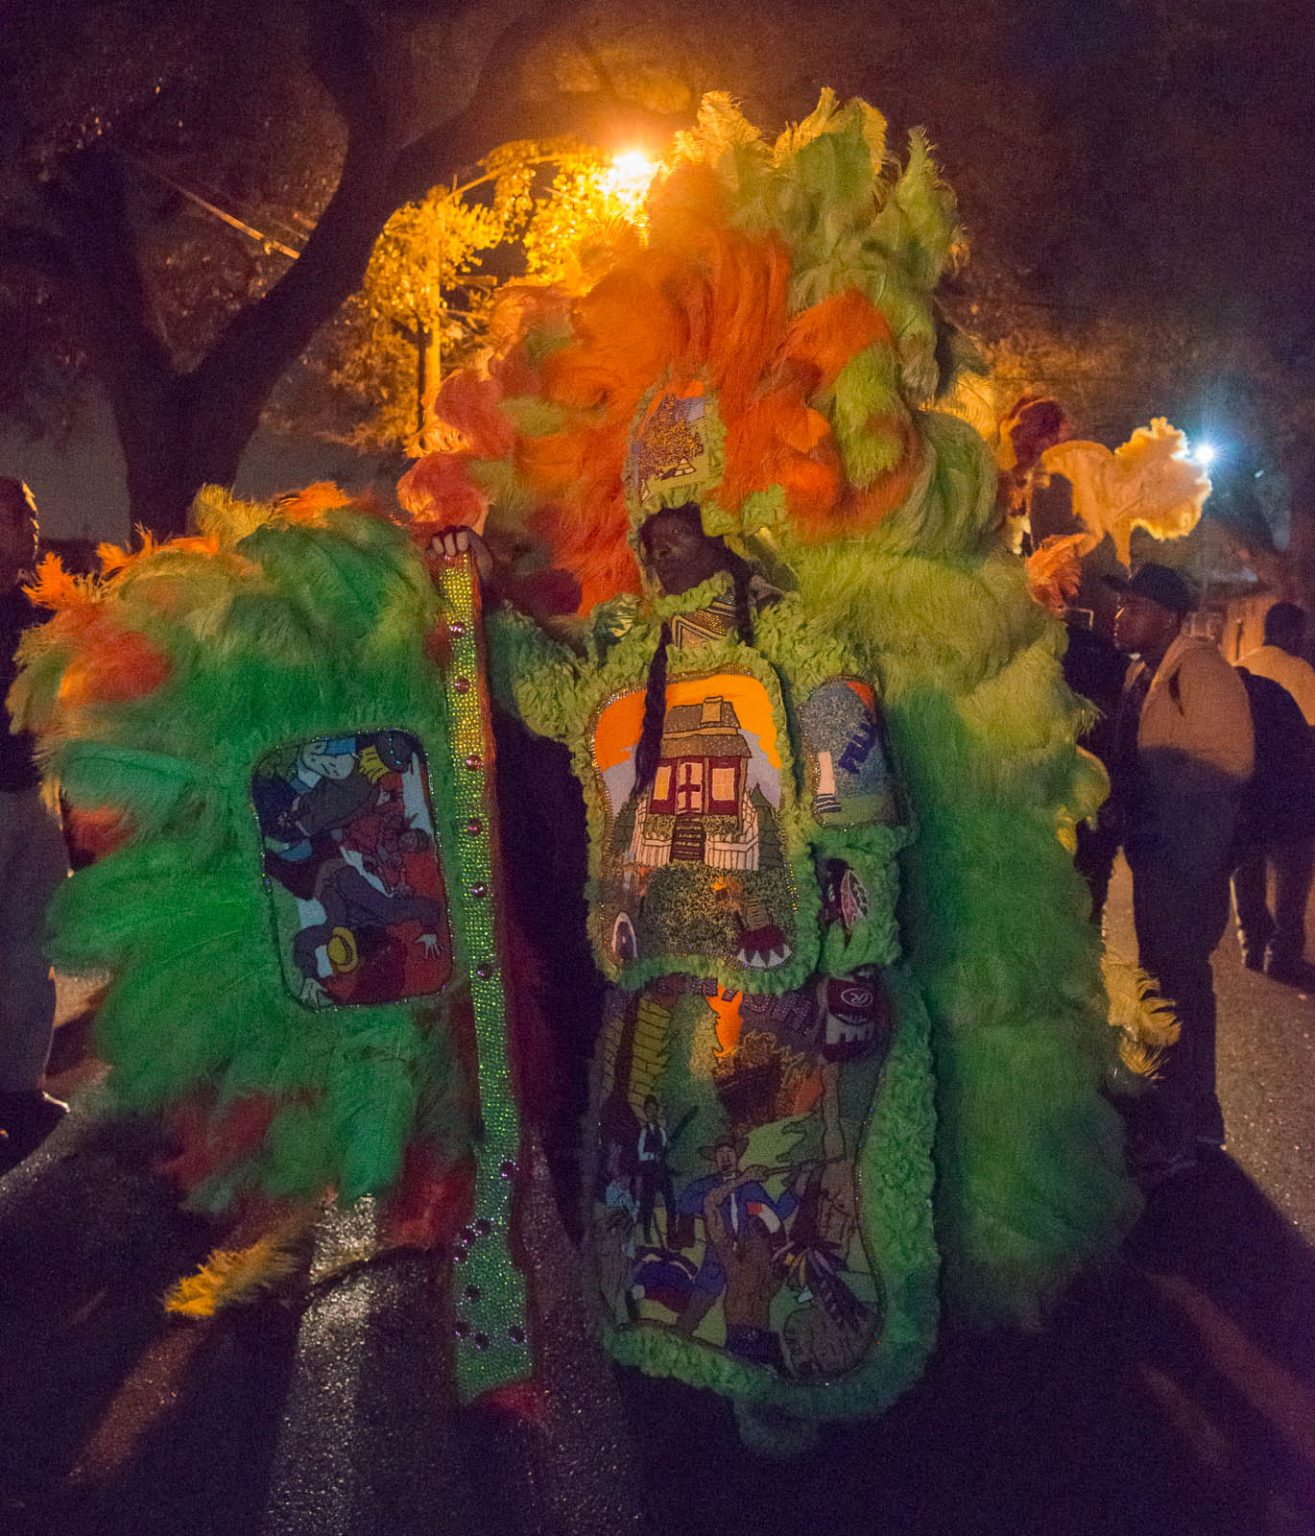 Mardi Gras Indians 2014, New Orleans, St. Joseph Night